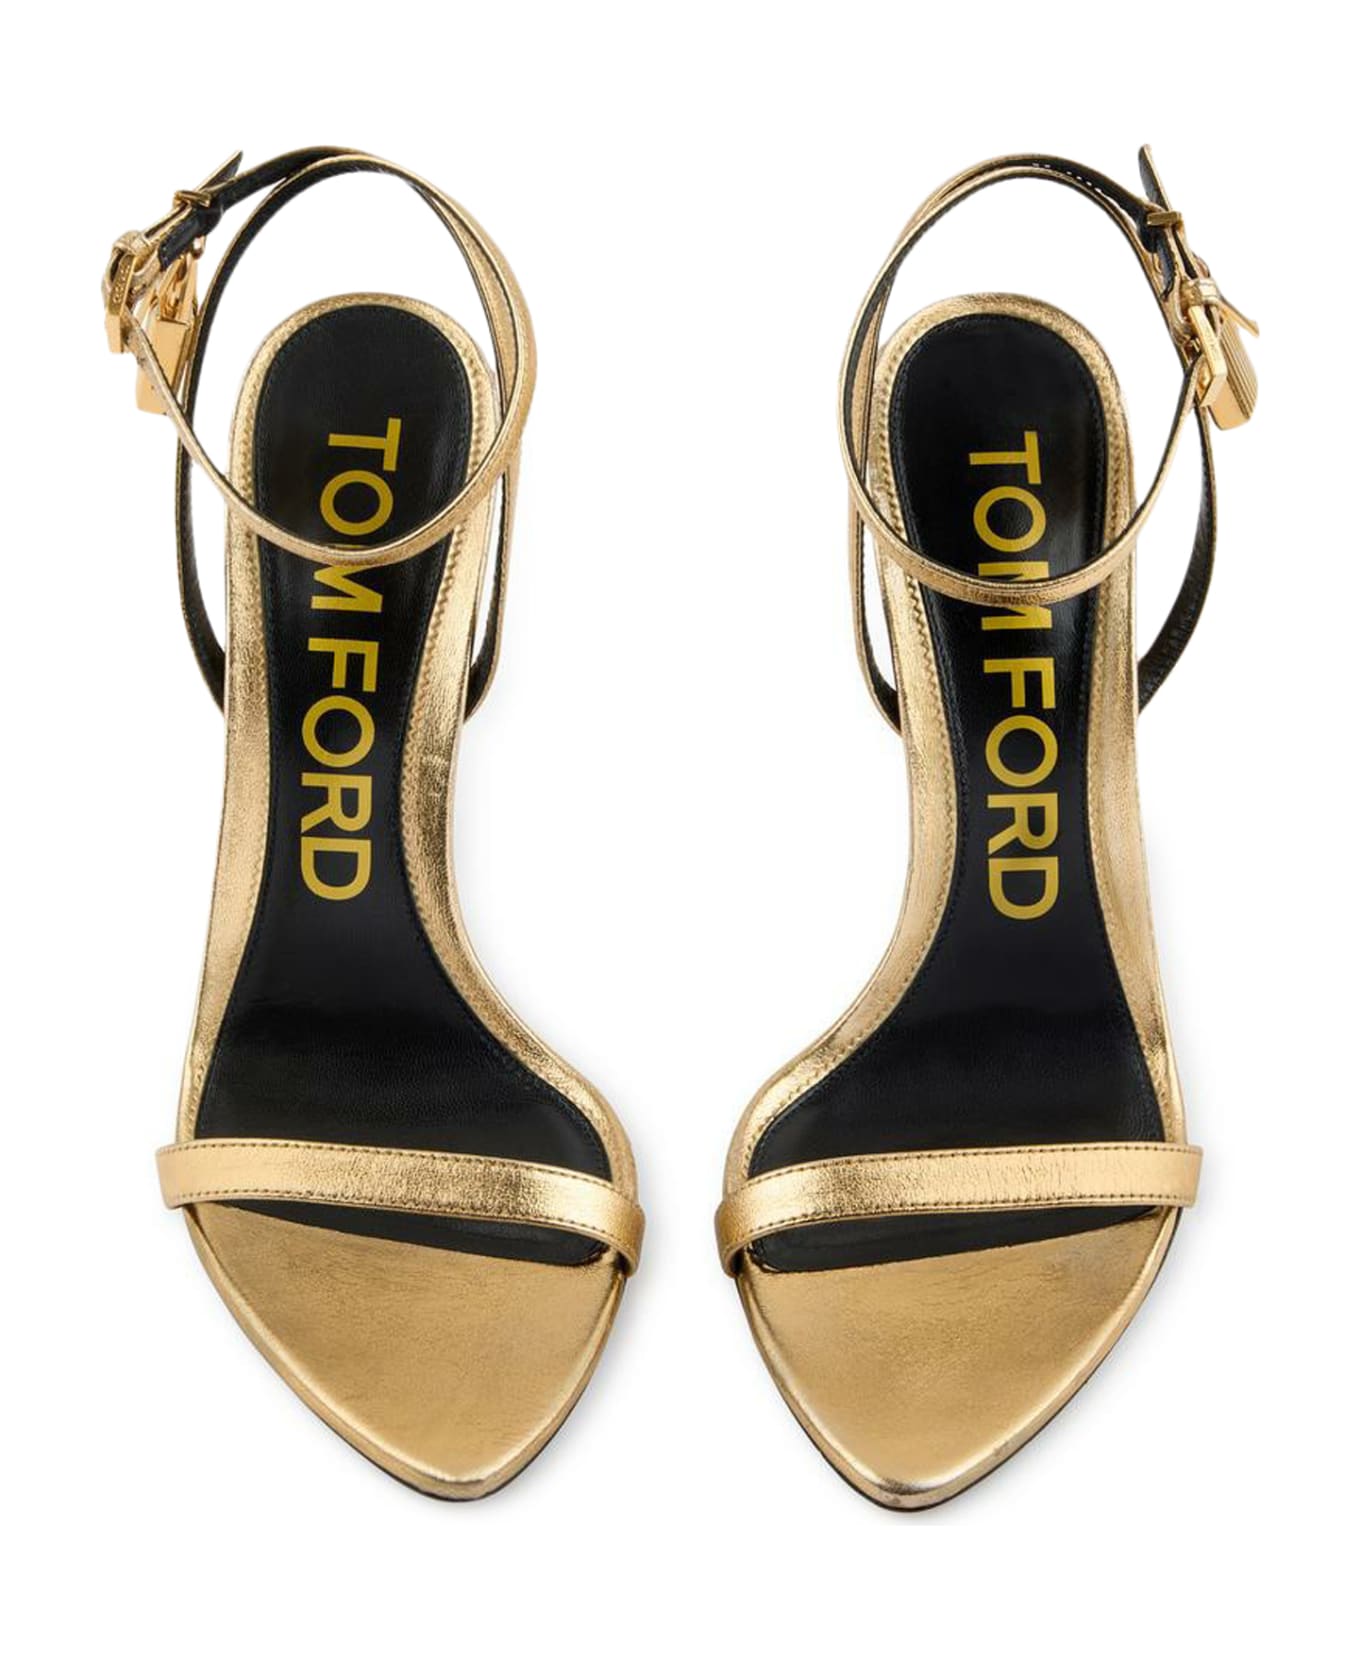 Tom Ford Sandals High Heel - Gold